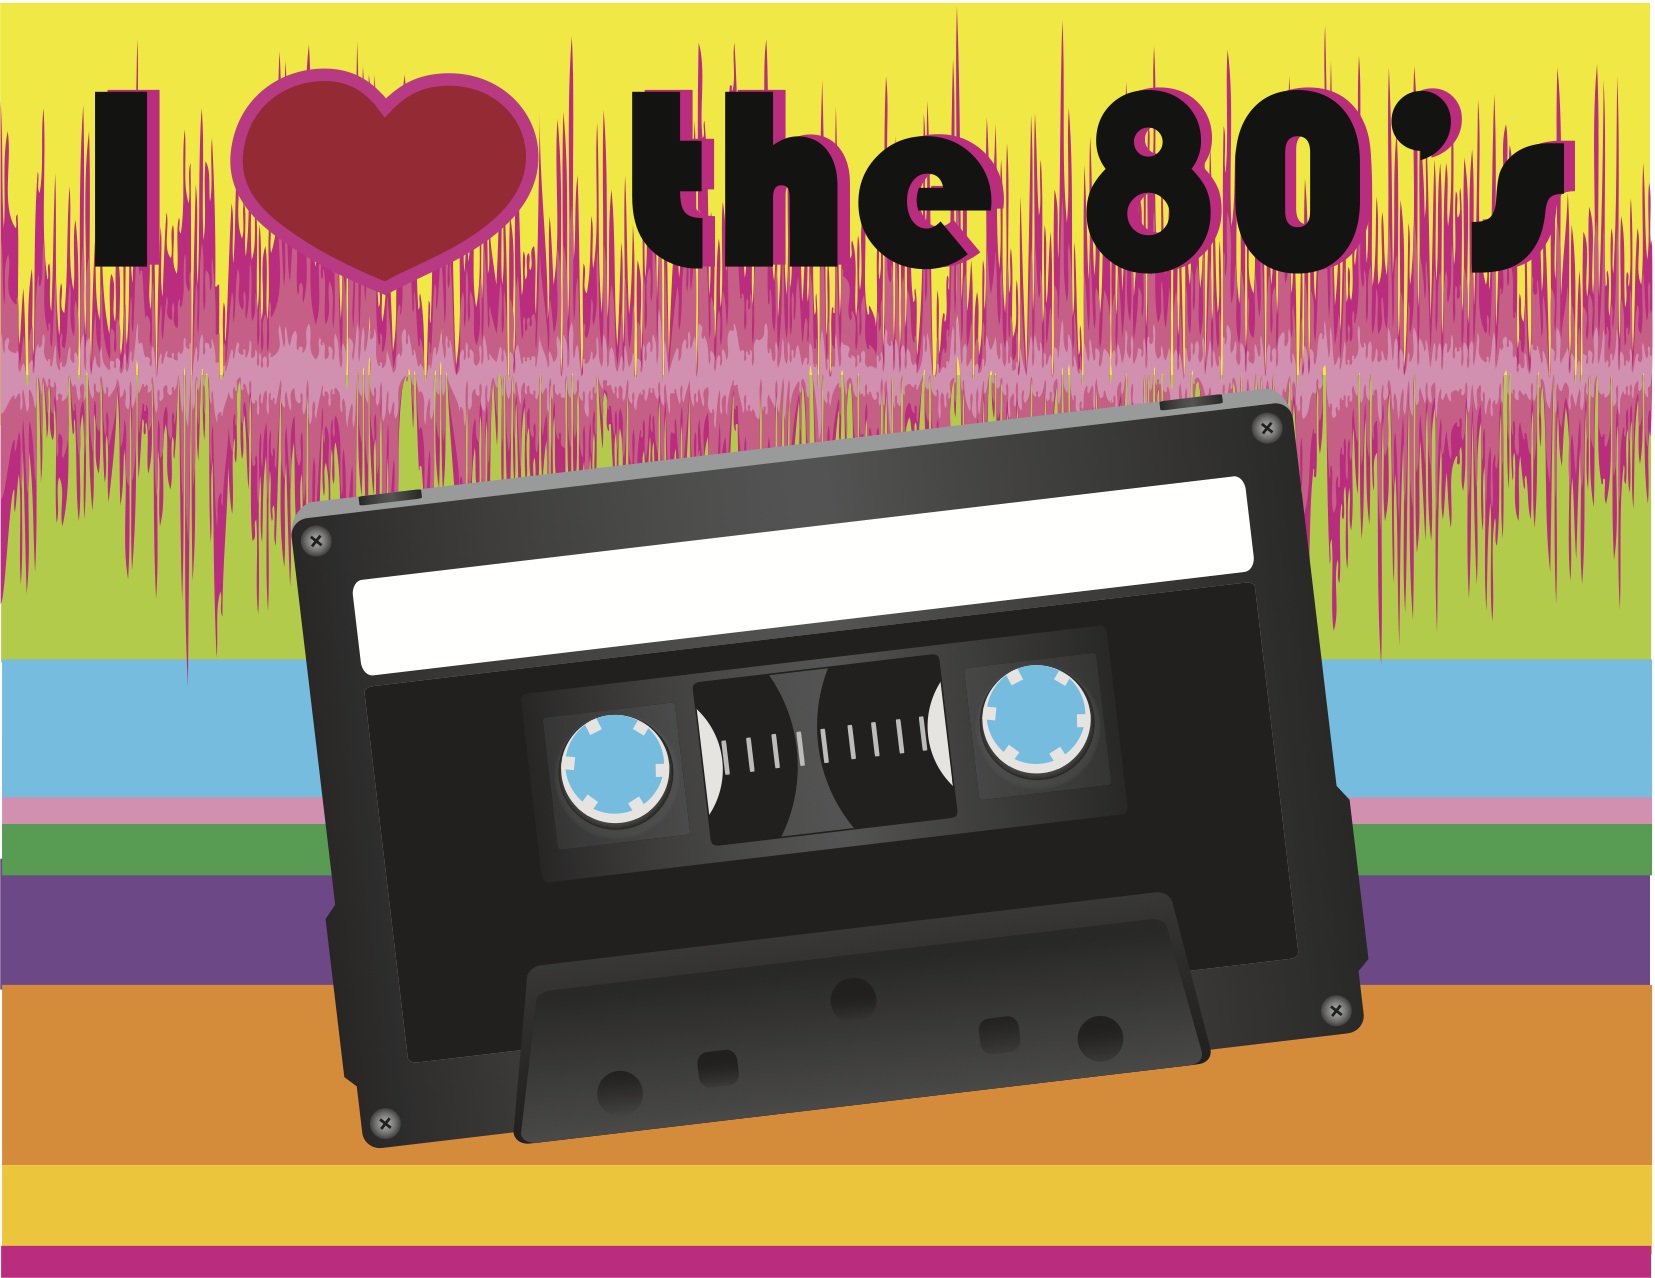 1980s-tape